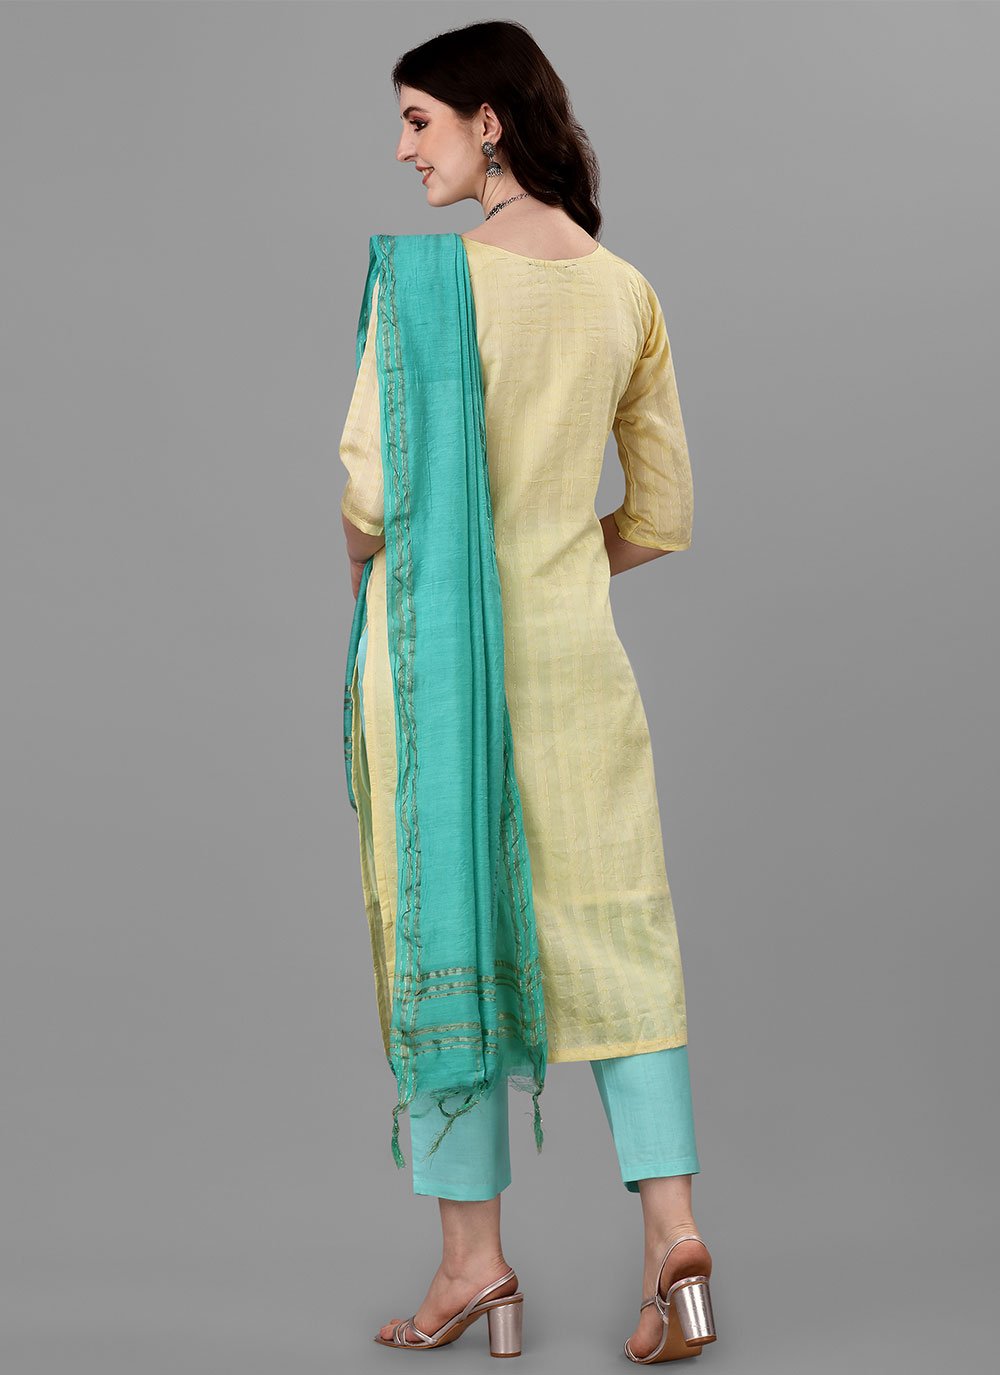 Salwar Suit Handloom Cotton Cream Embroidered Salwar Kameez